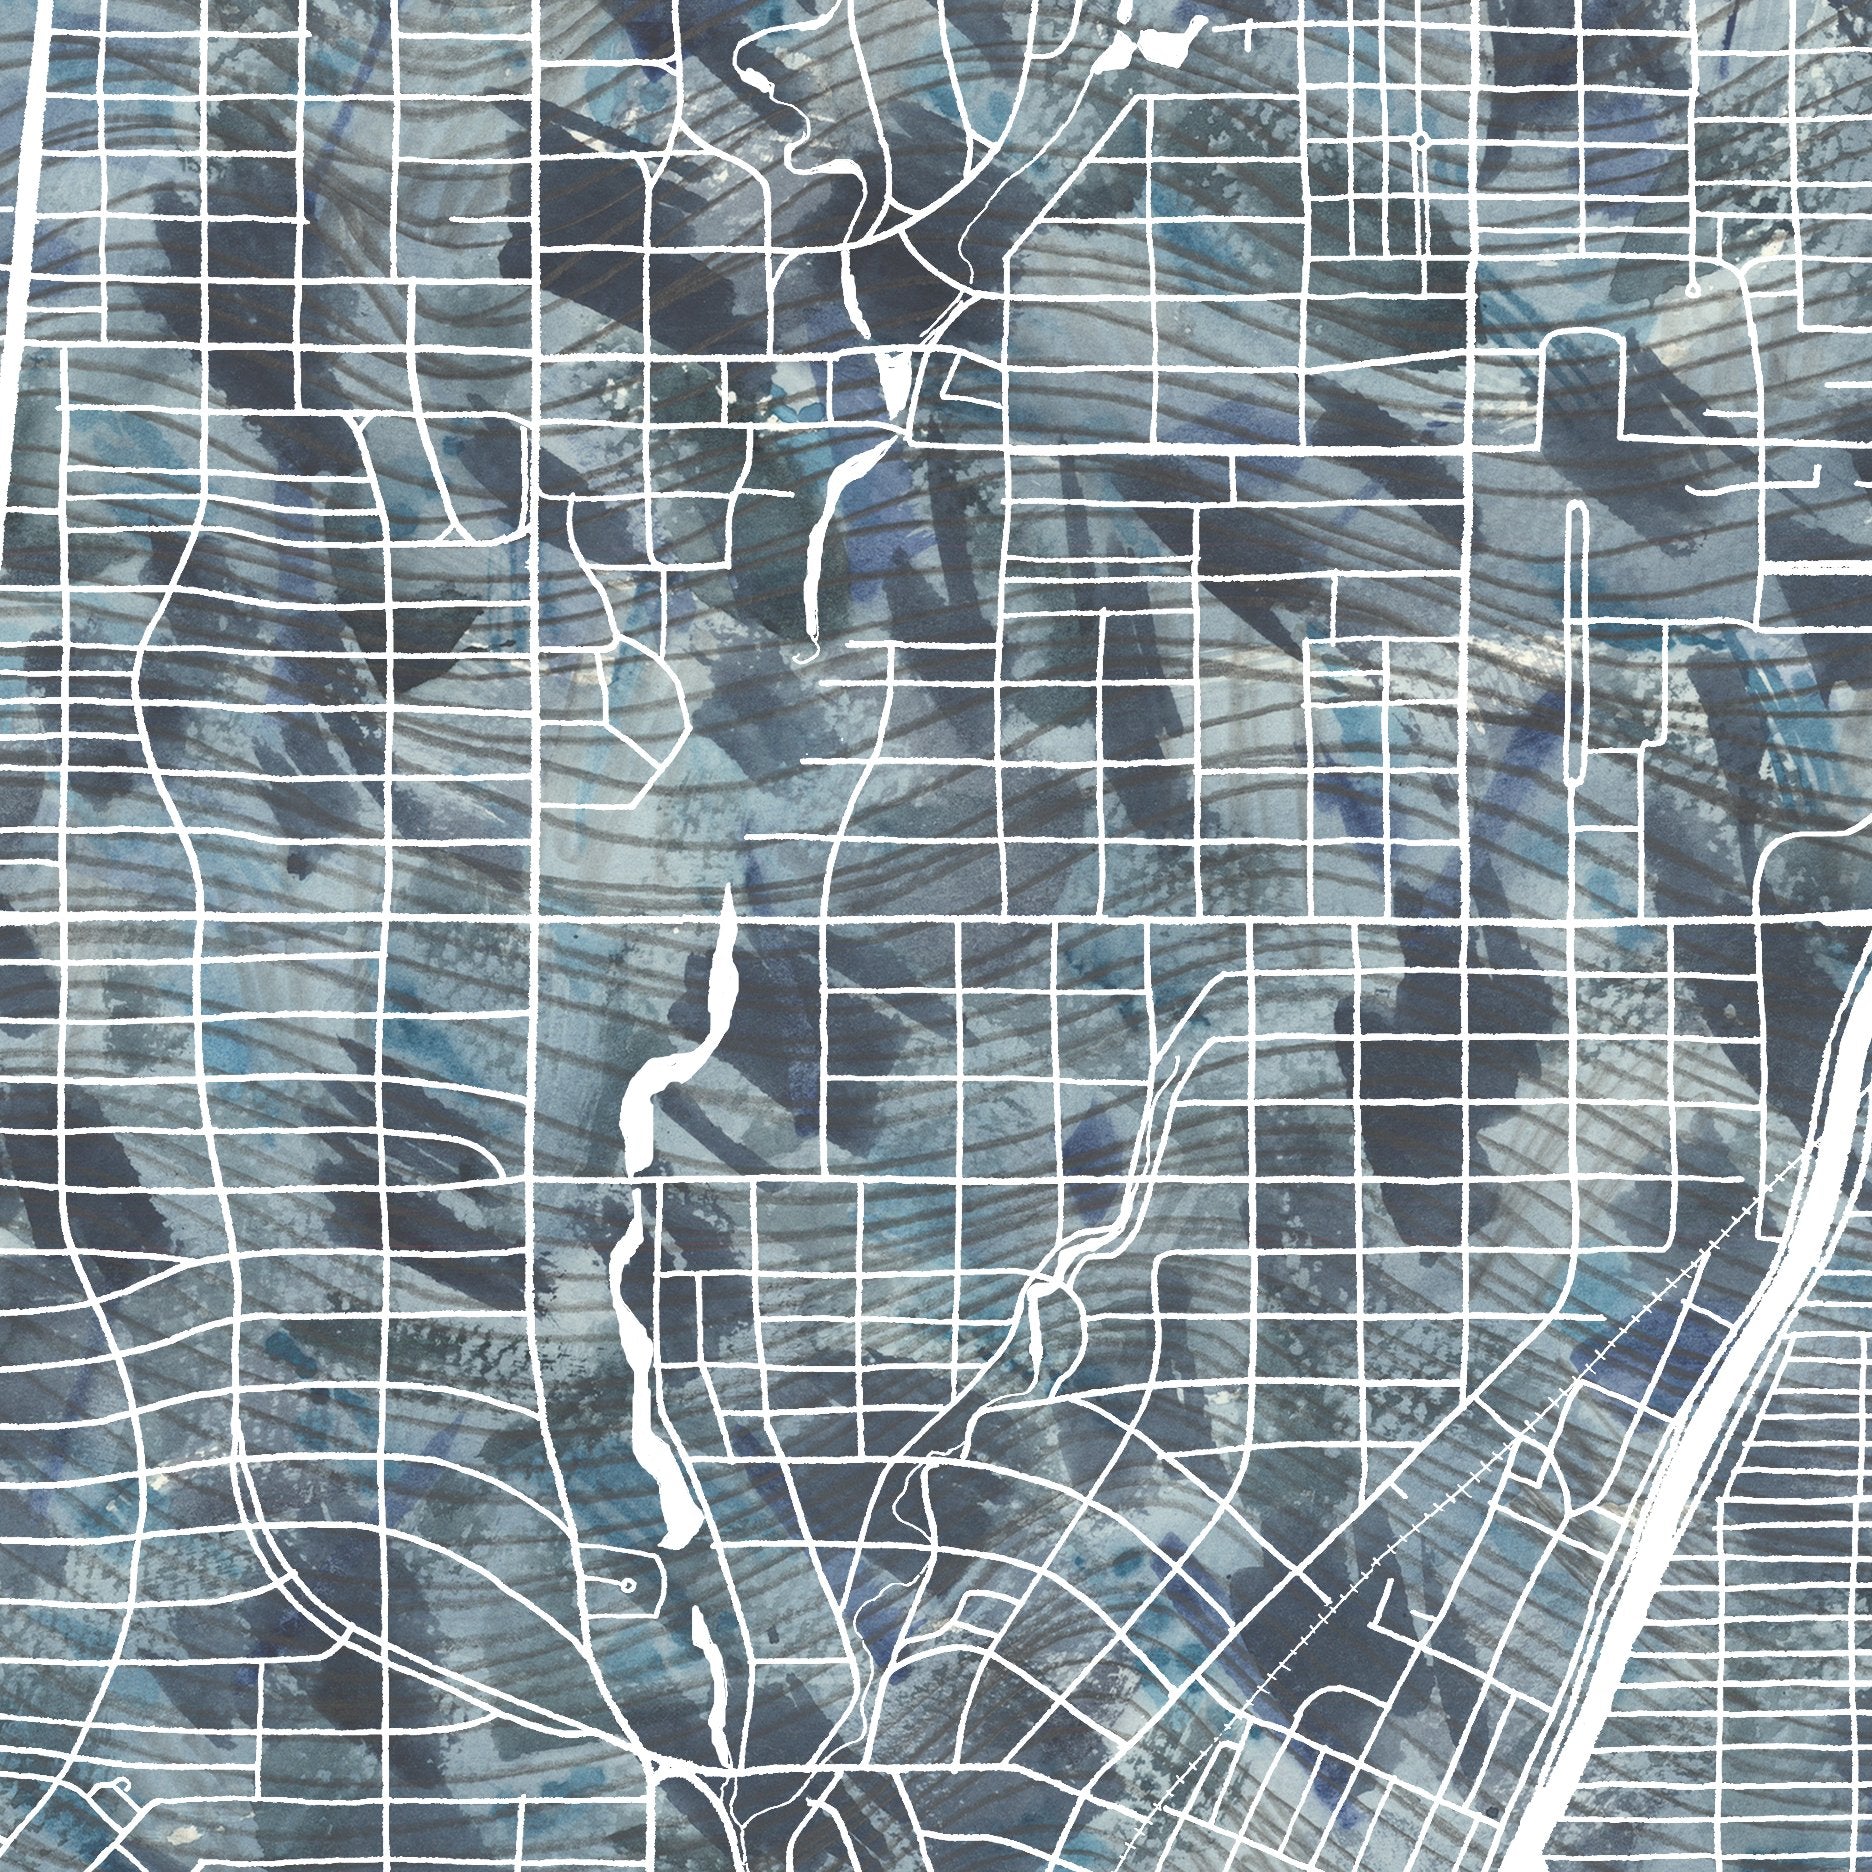 DALLAS Urban Fabrics City Map: PRINT